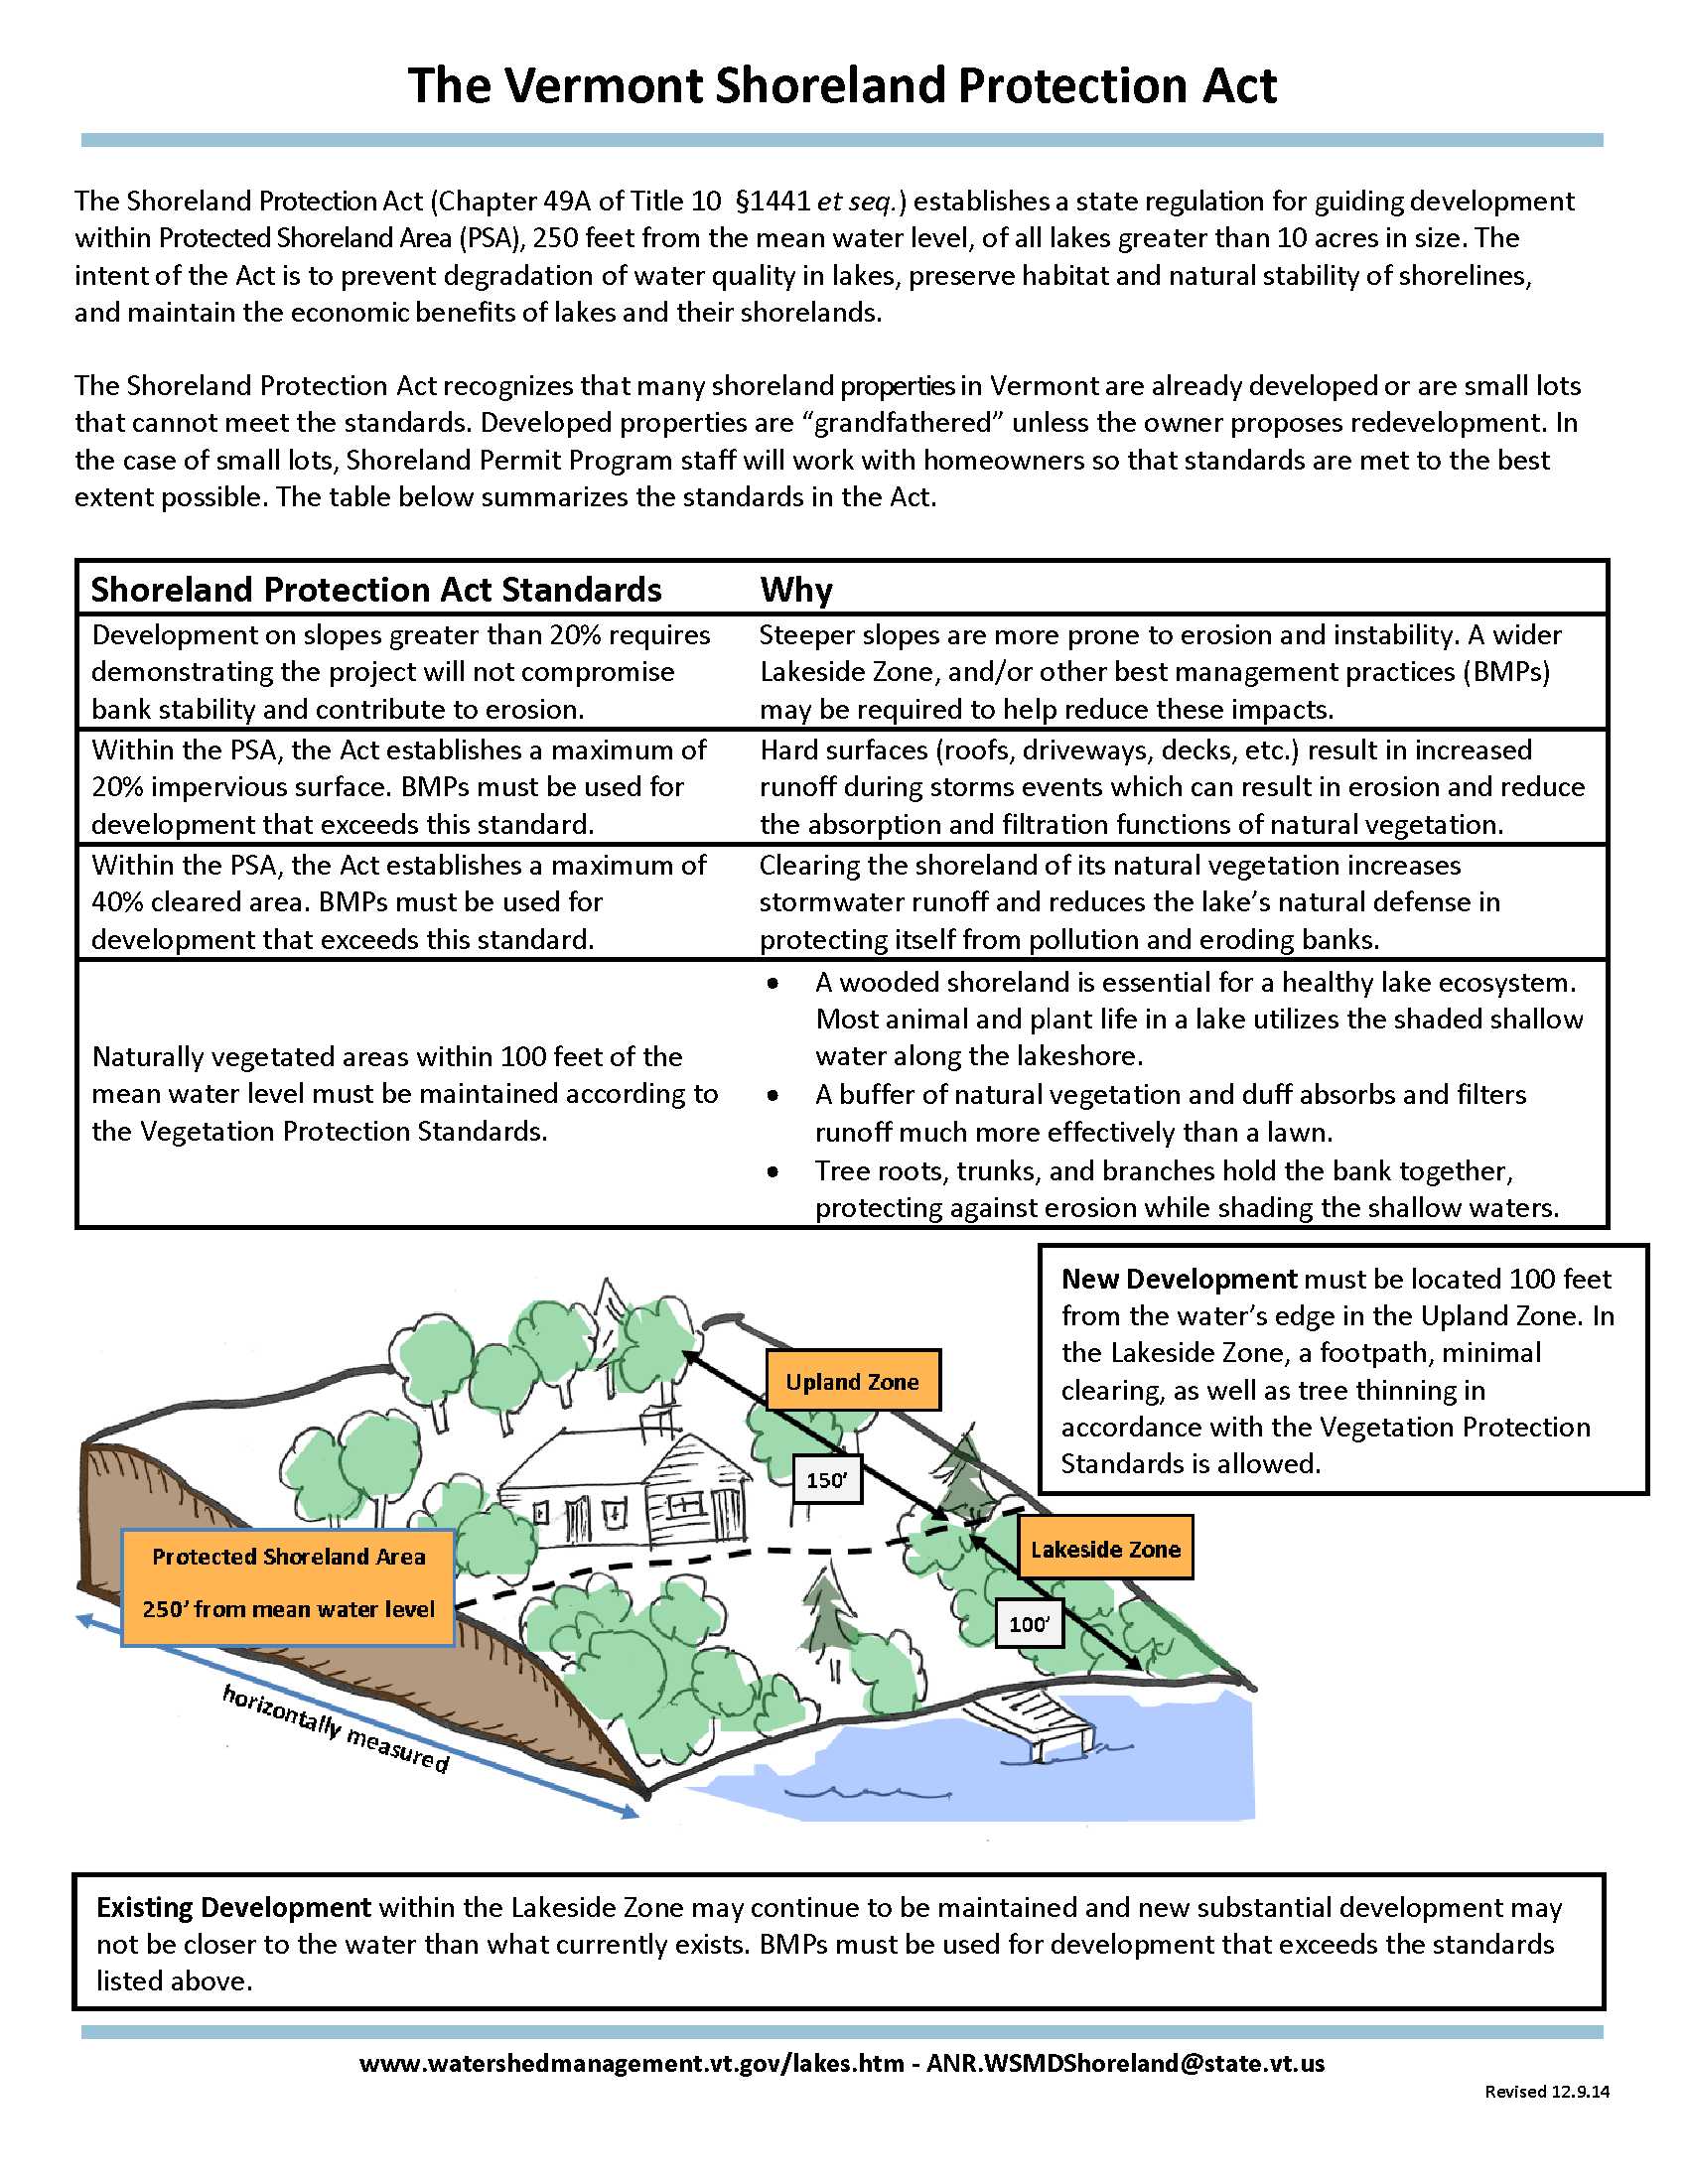 Vermont Shoreland Protection Act Summary_1